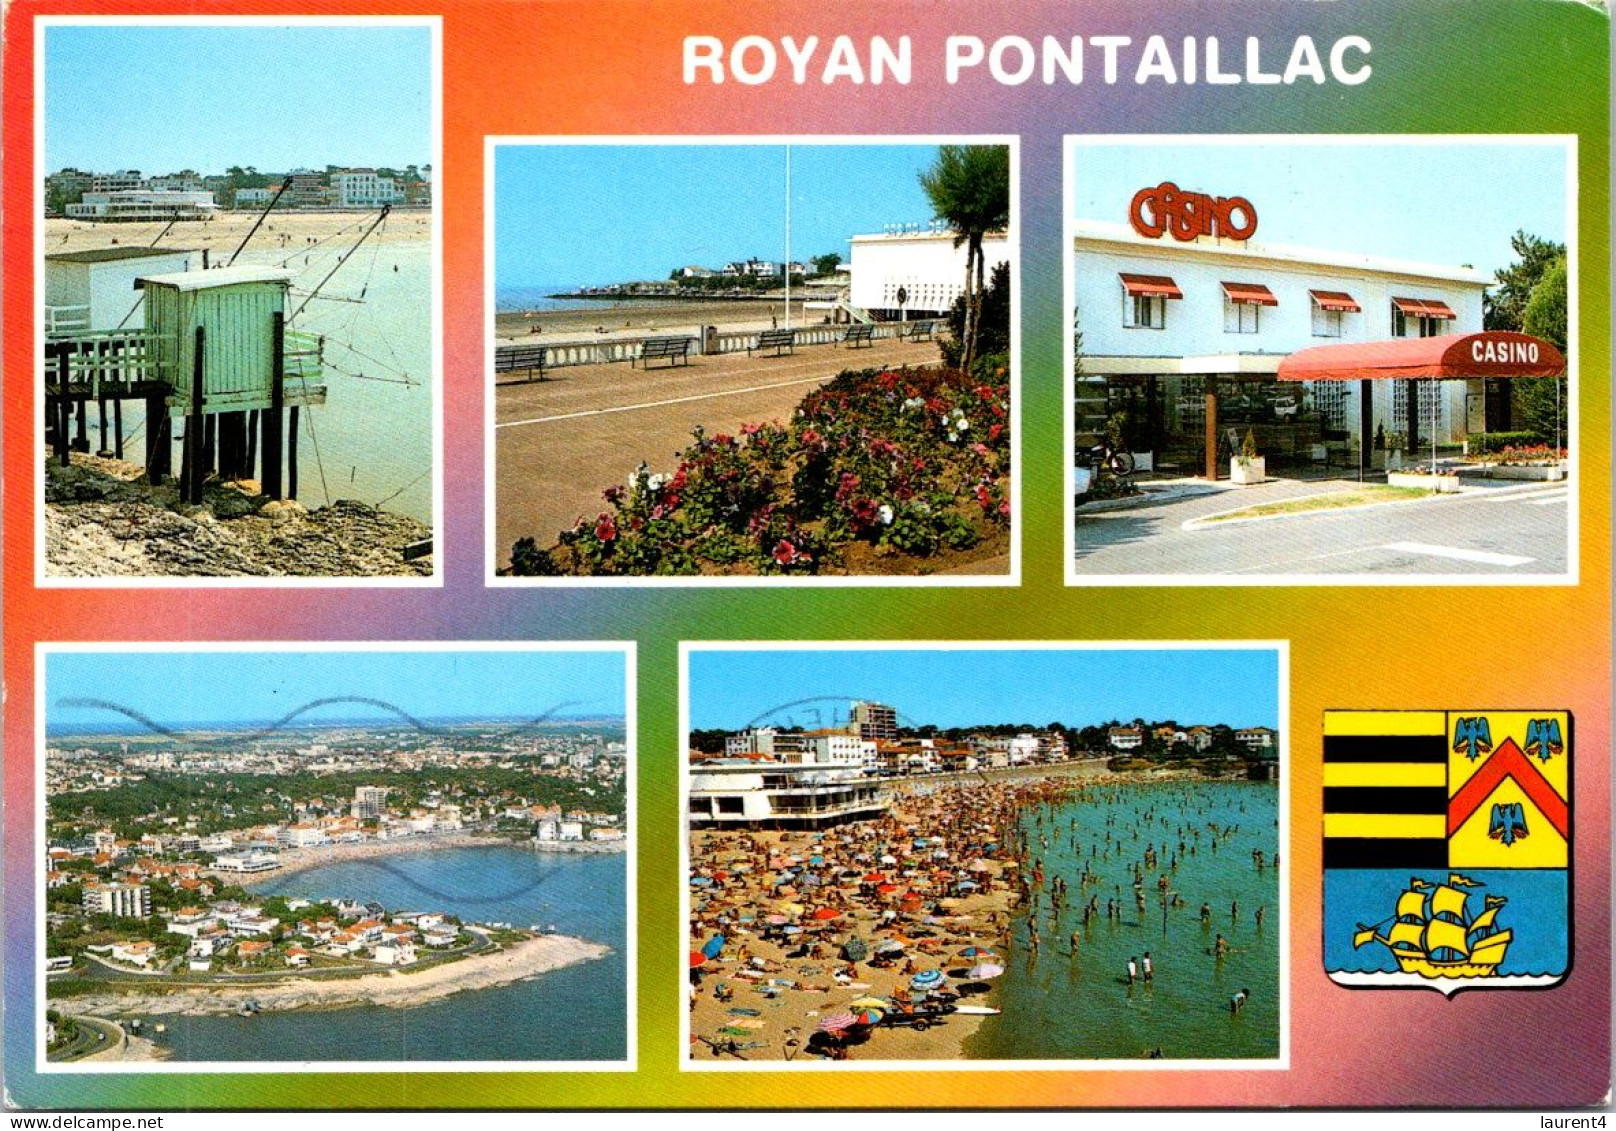 11-11-2023 (1 V 53) FRance - Royan Pontaillac (with Casino) - Casinos